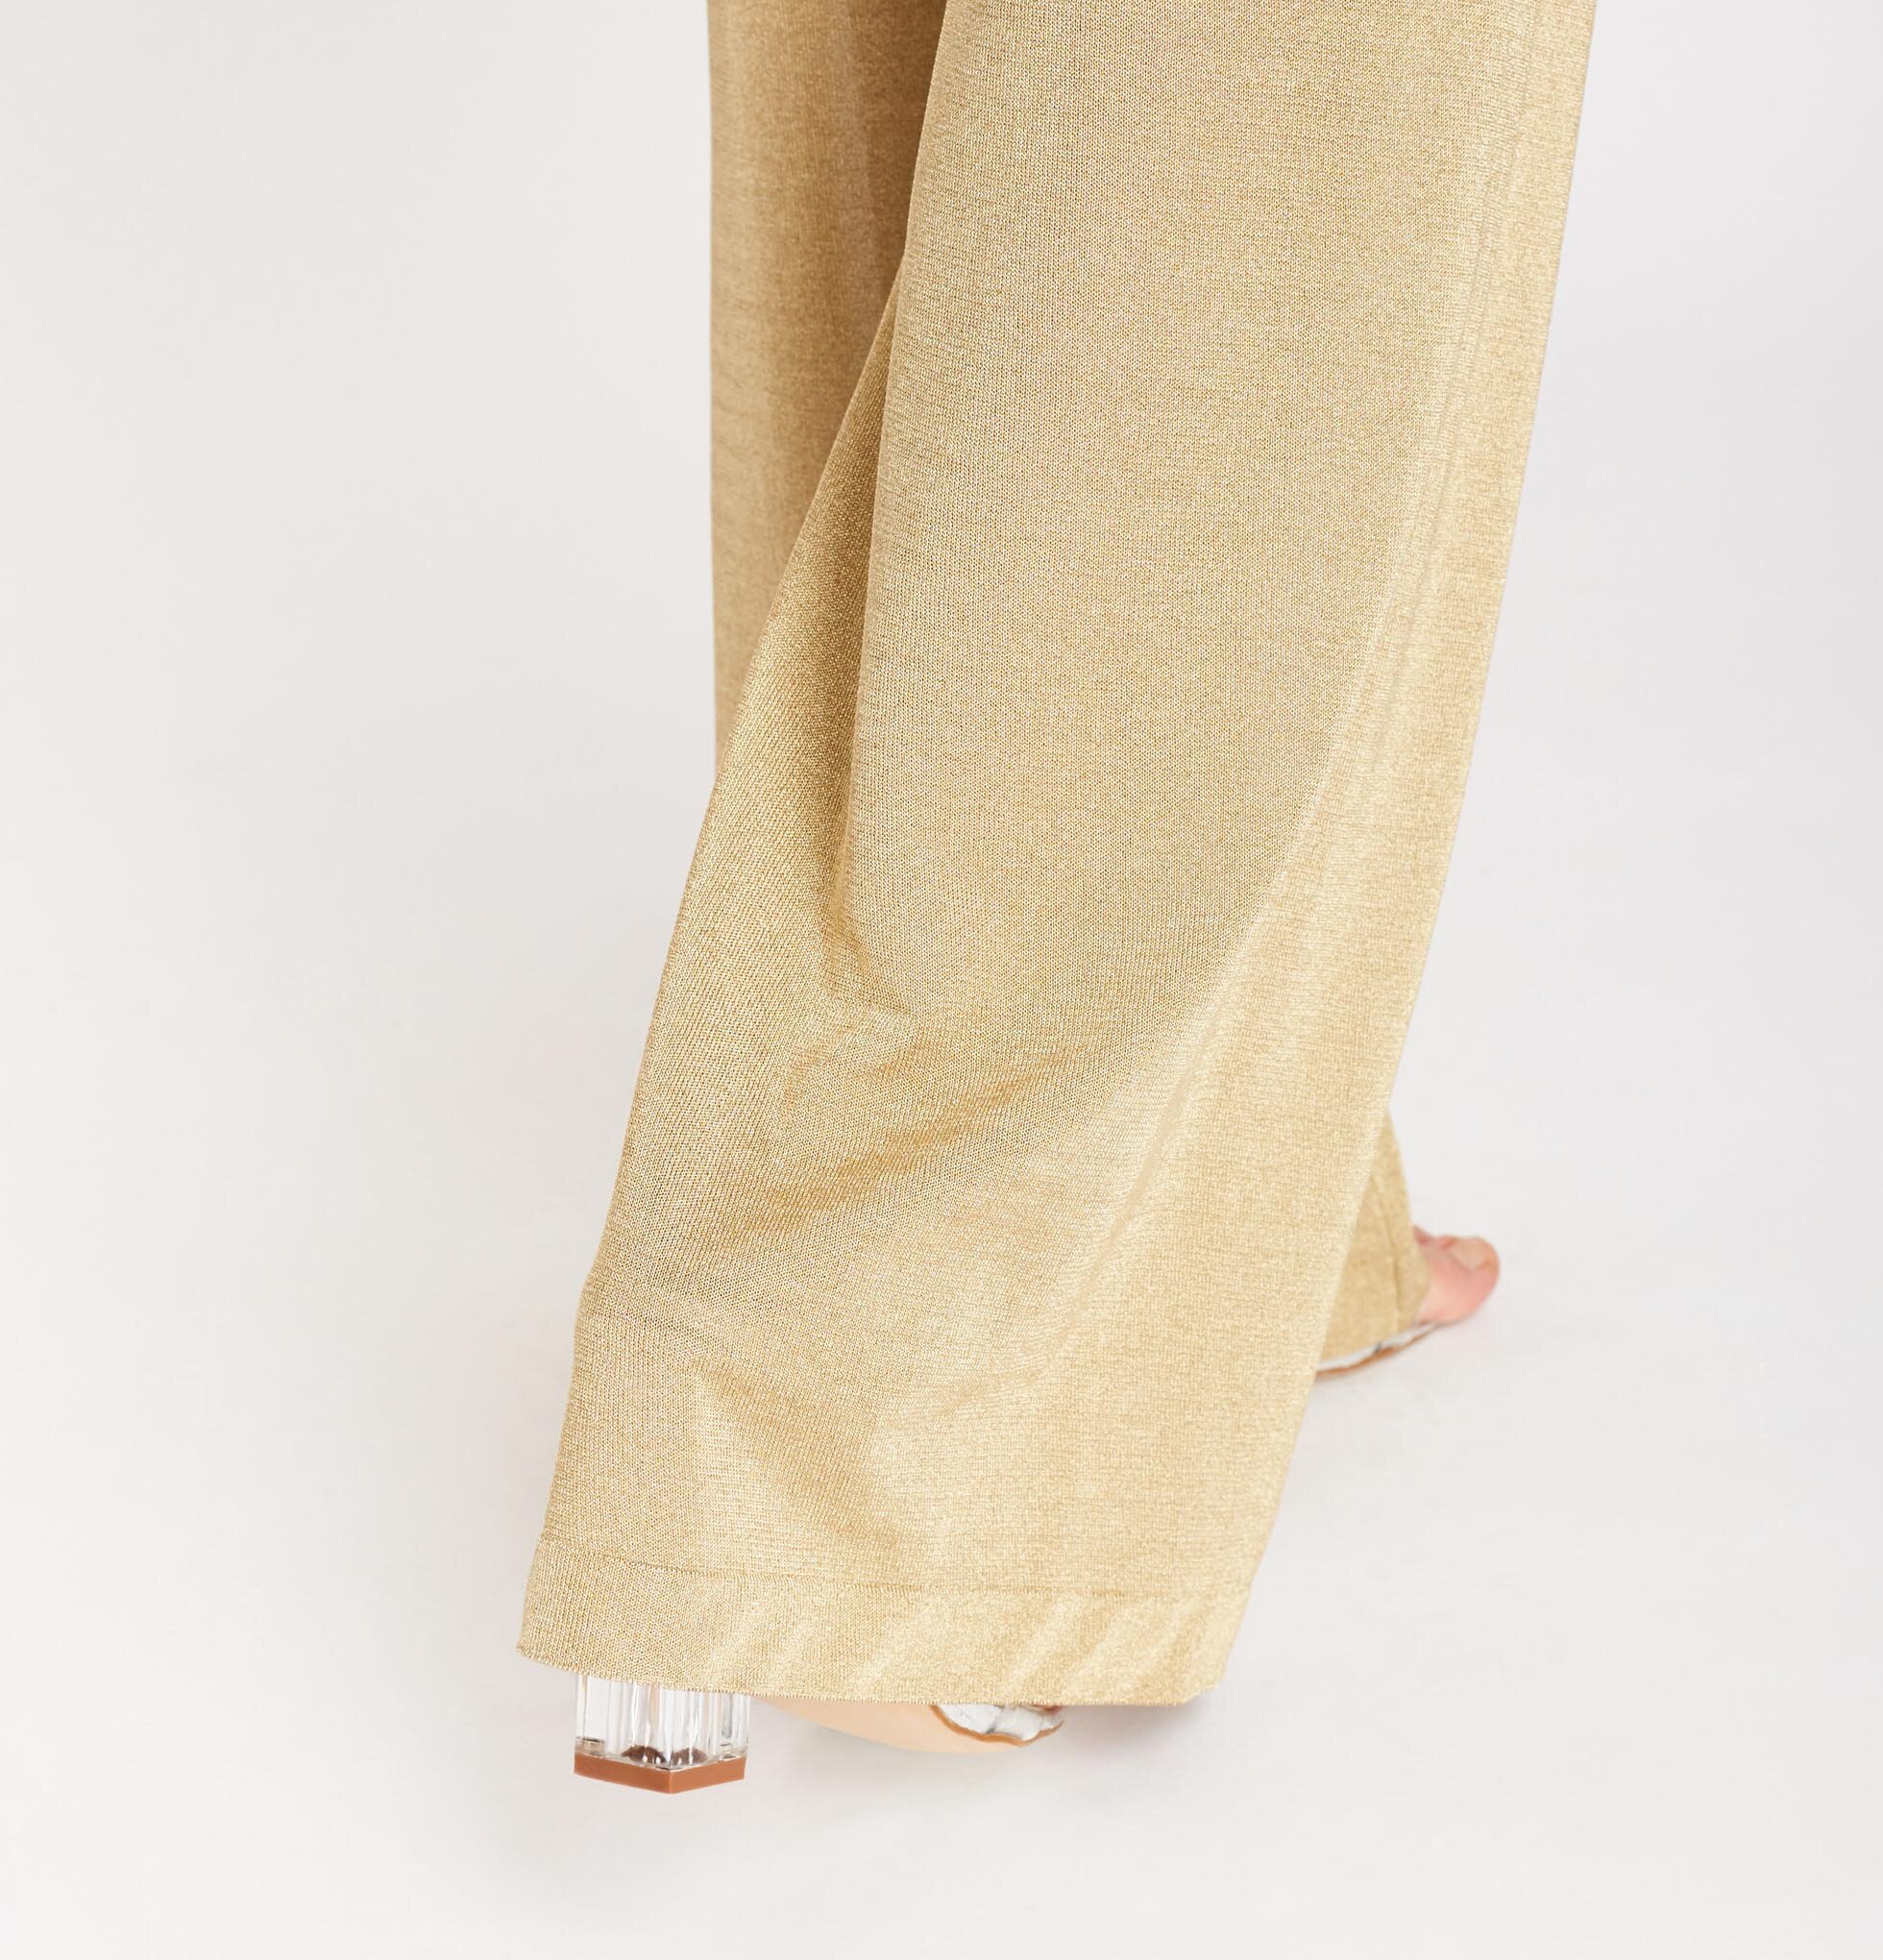 E-080-pantaloni-lurex-ampi-dettaglio-fondo-oro-1960 x 2040.jpg